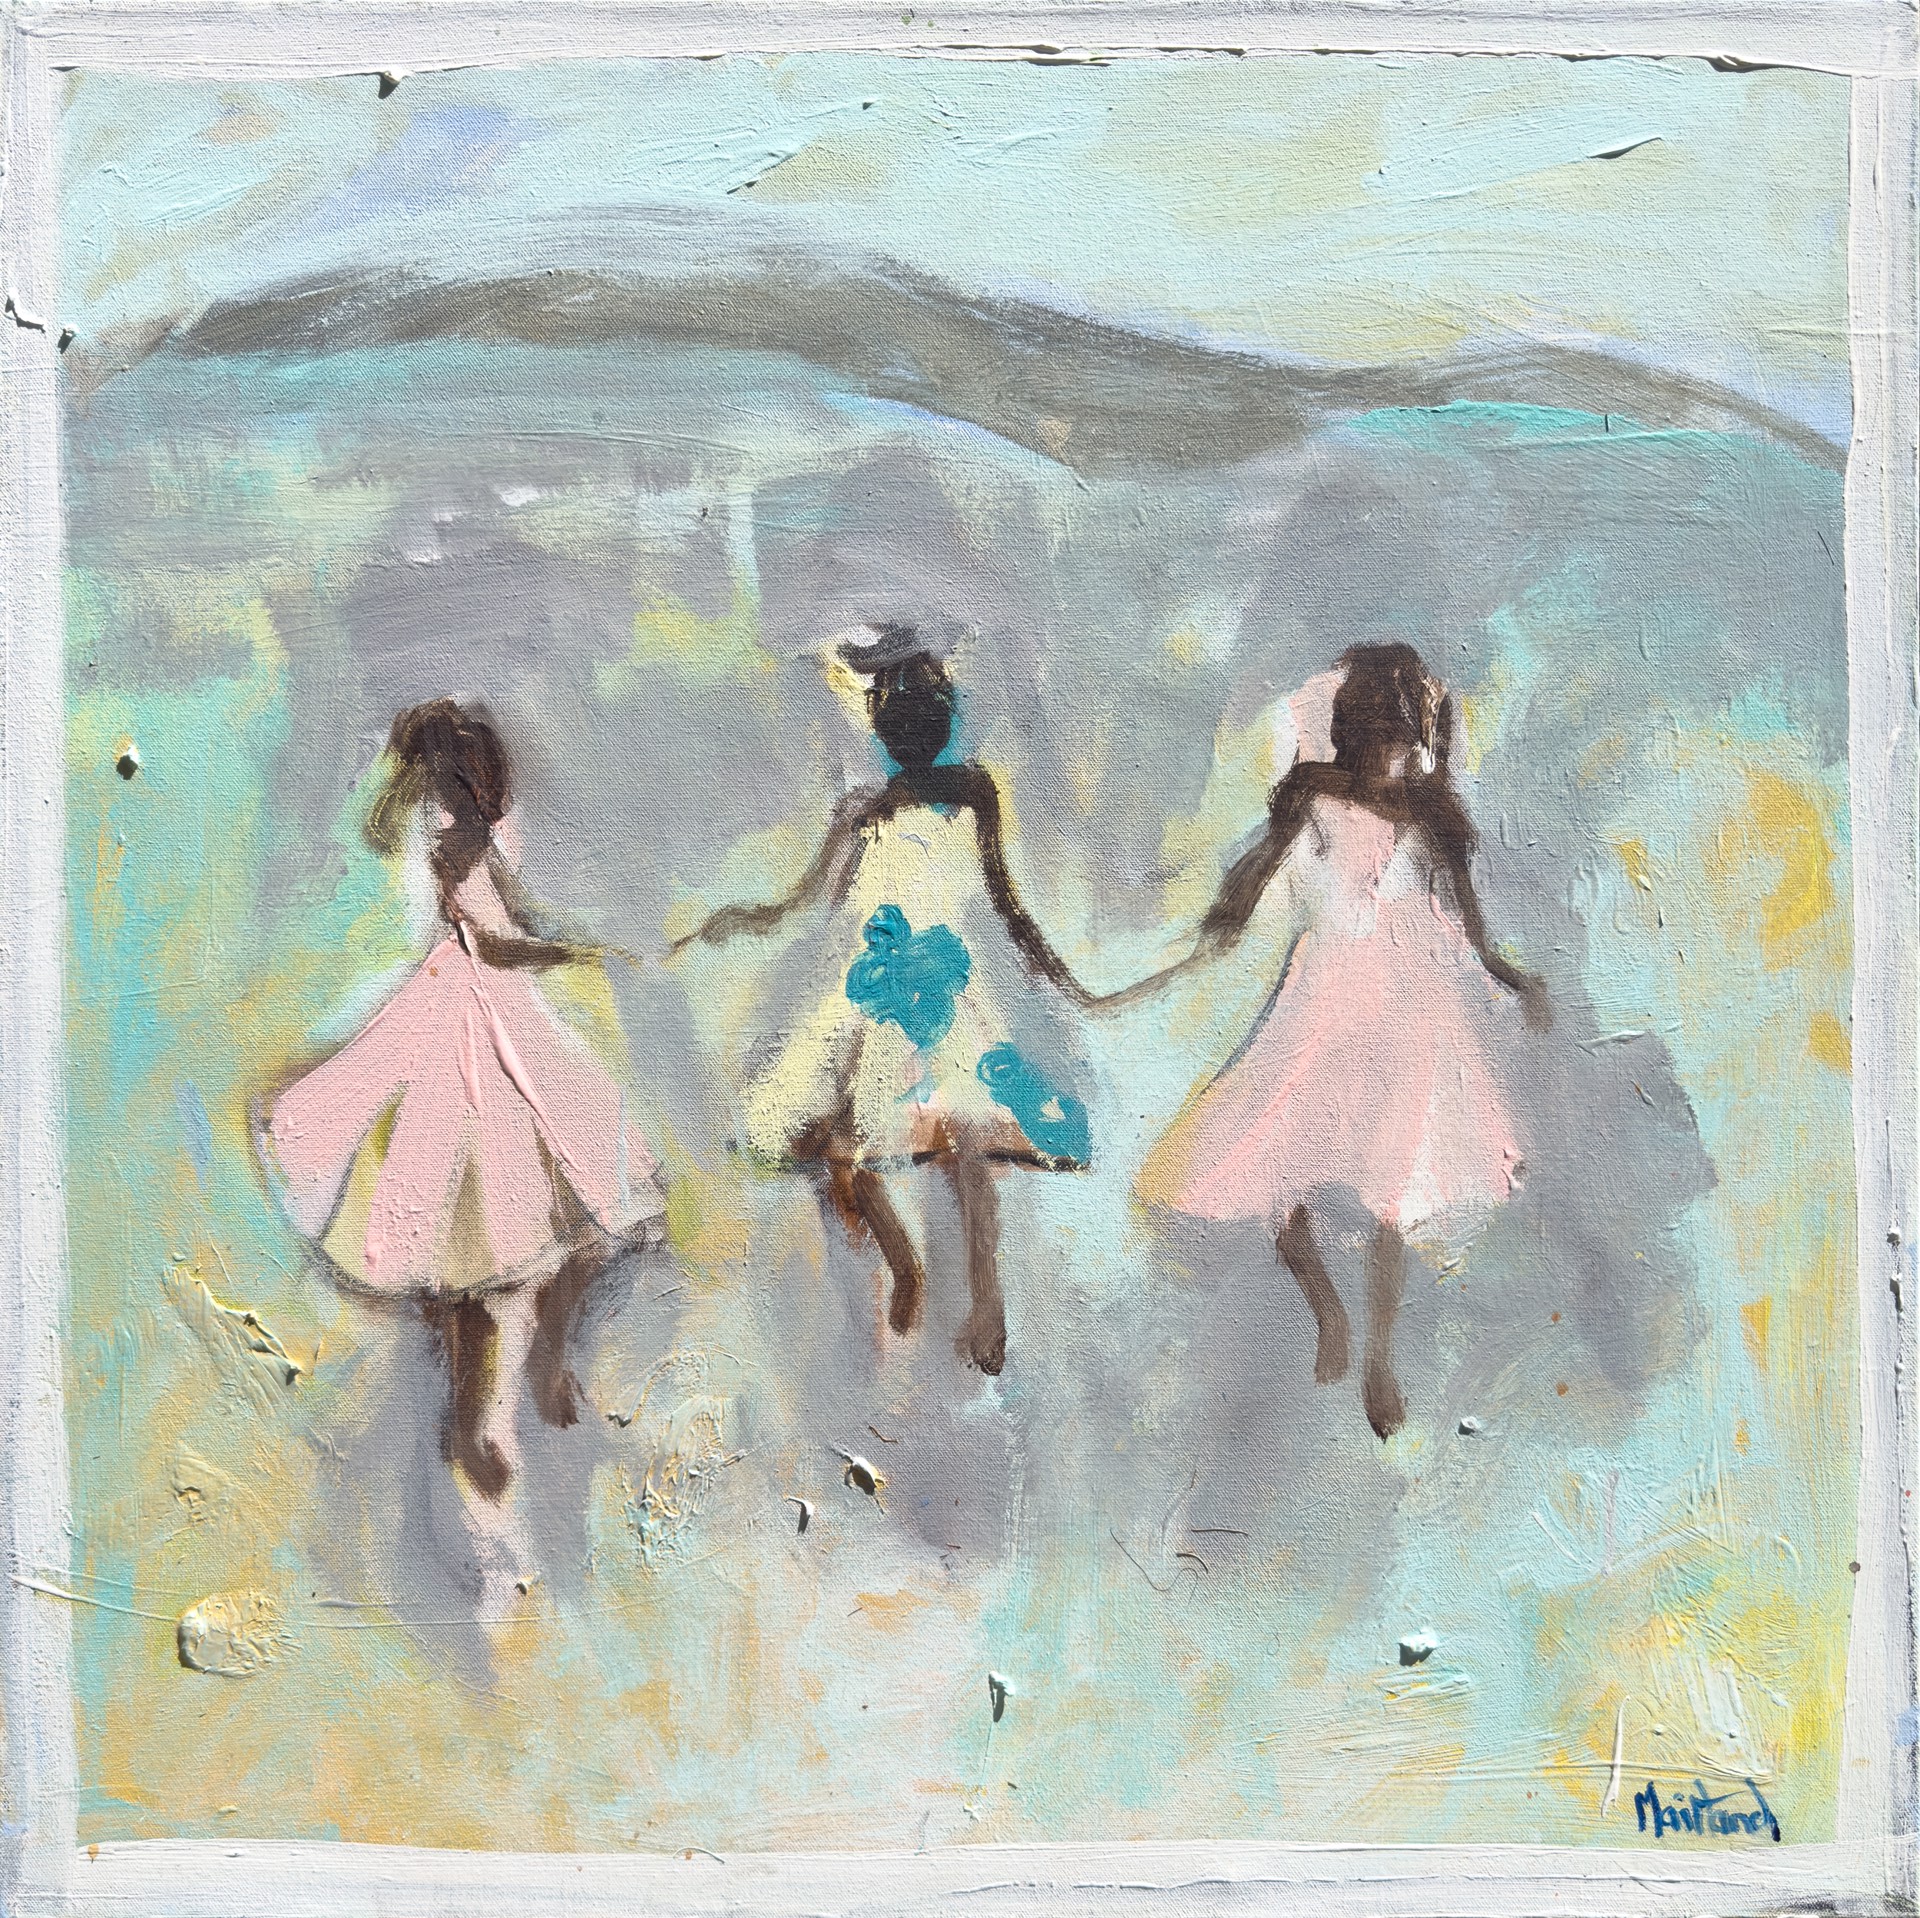 Three Girls Dancing on Blue by John Maitland